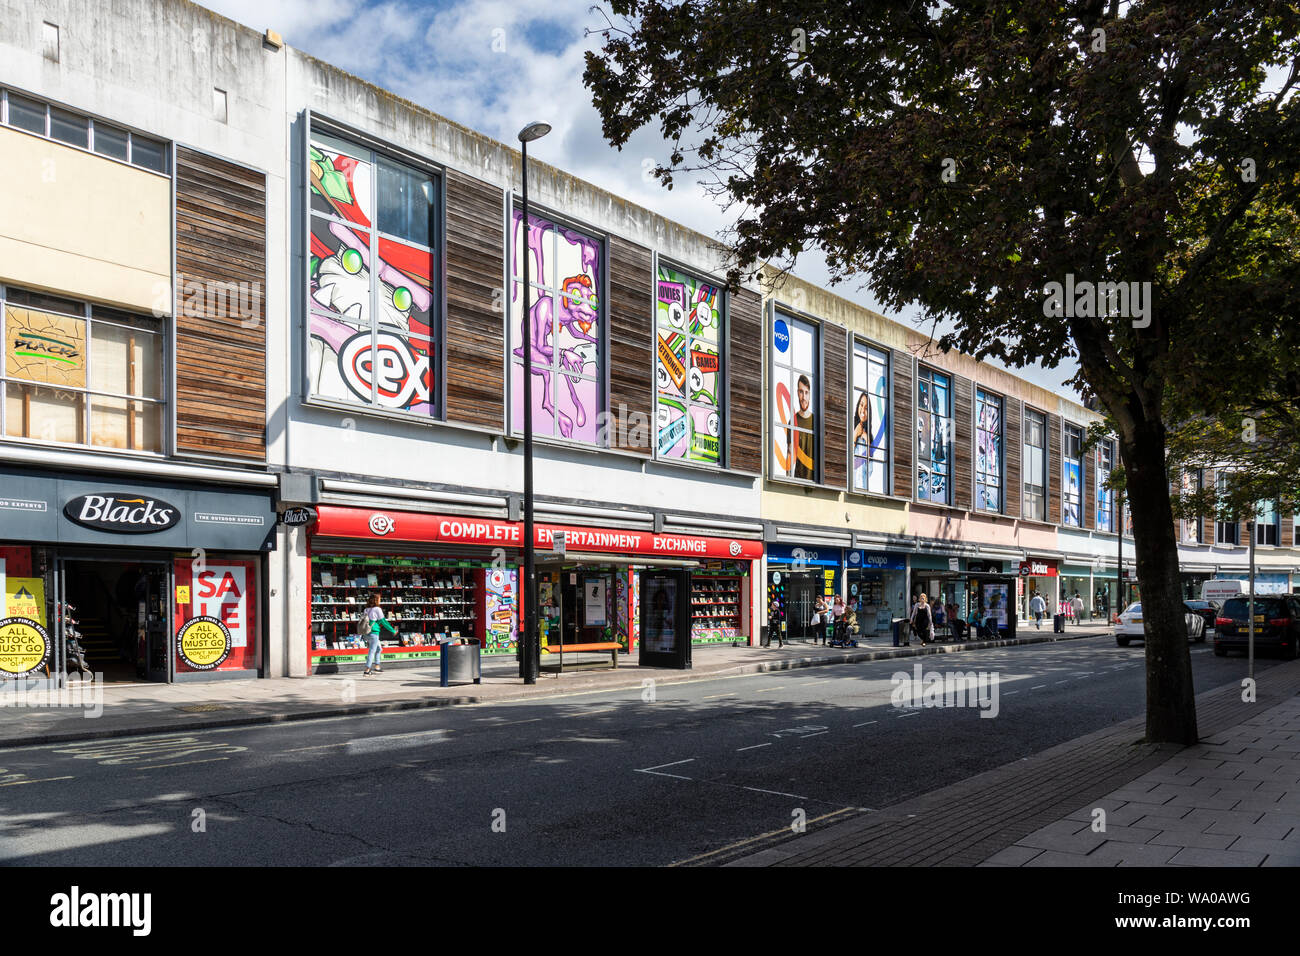 Complete Entertainment Exchange (cex), Bristol Shopping Quarter, The Horsefair, Bristol, Inghilterra, Regno Unito Foto Stock